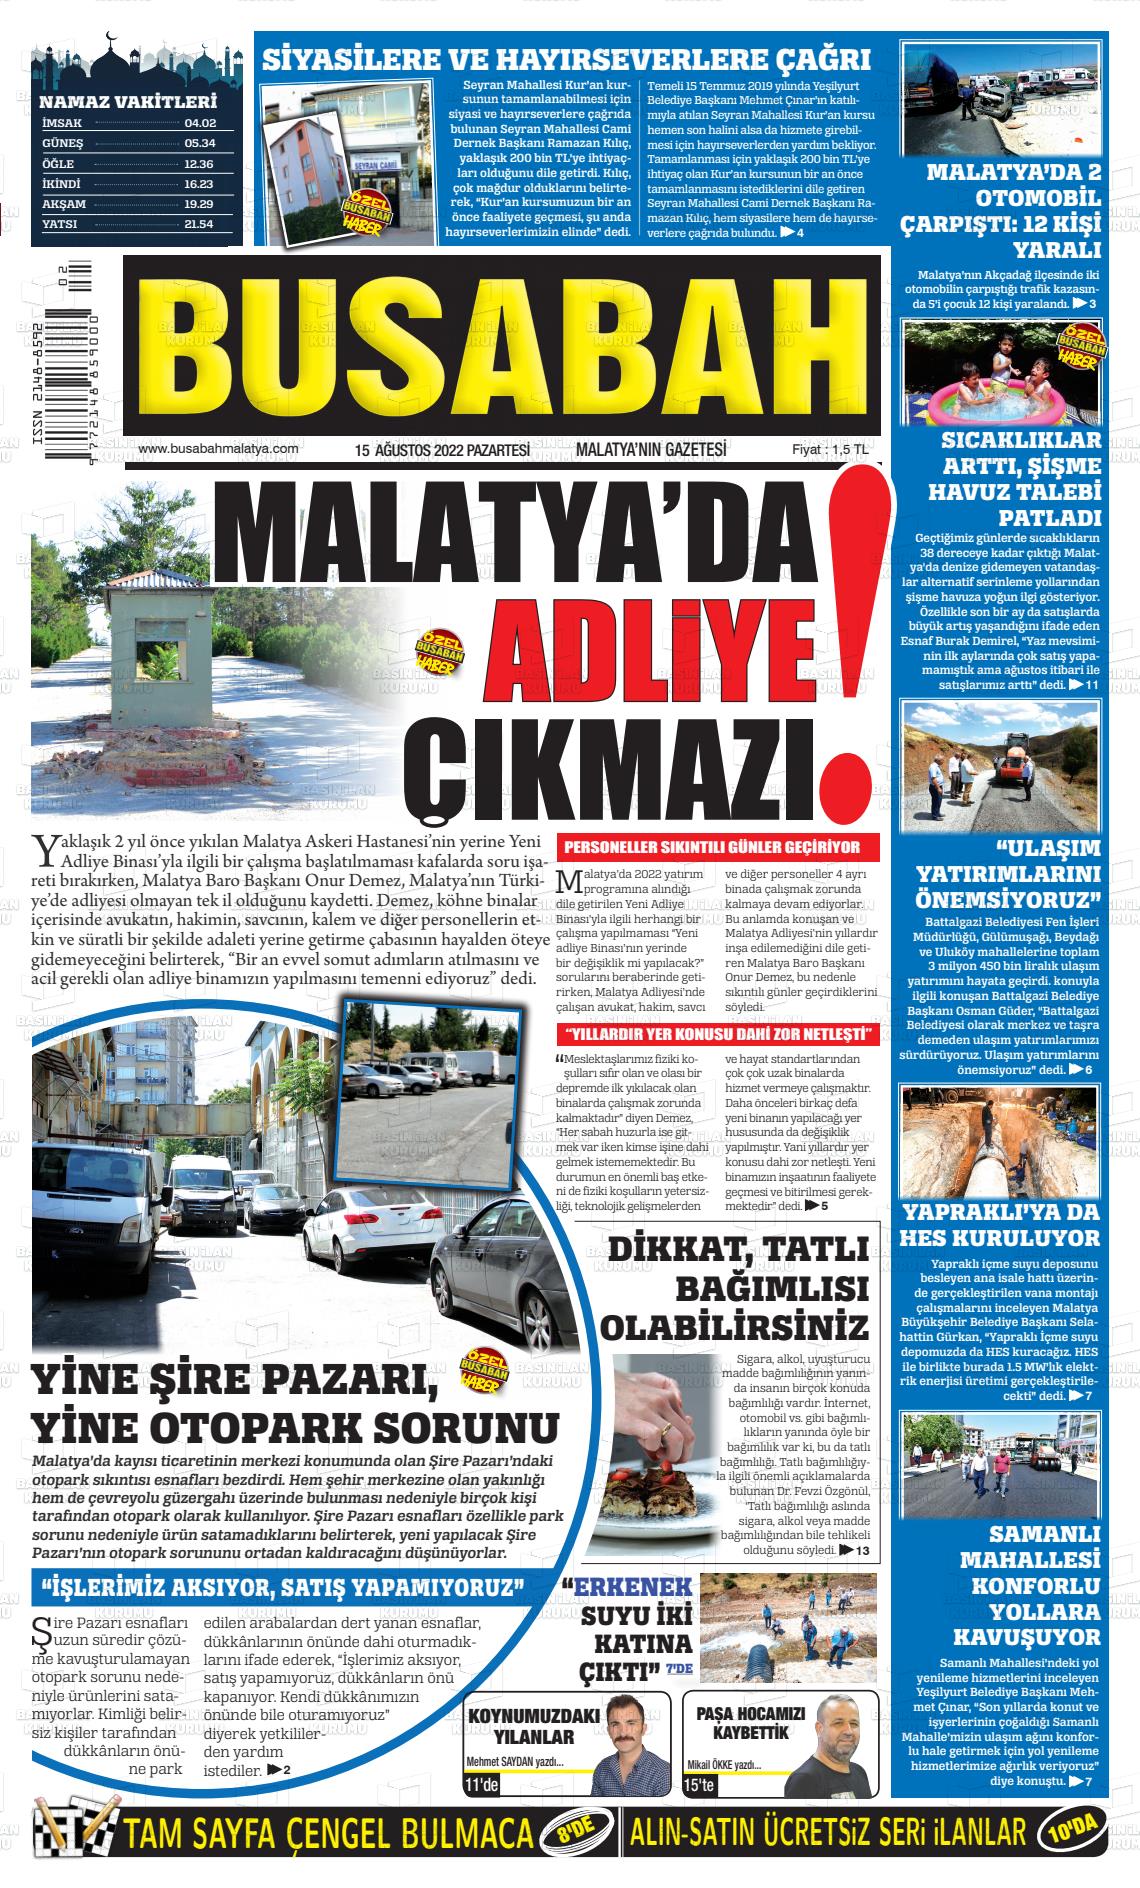 15 Ağustos 2022 BUSABAH Malatya Gazete Manşeti